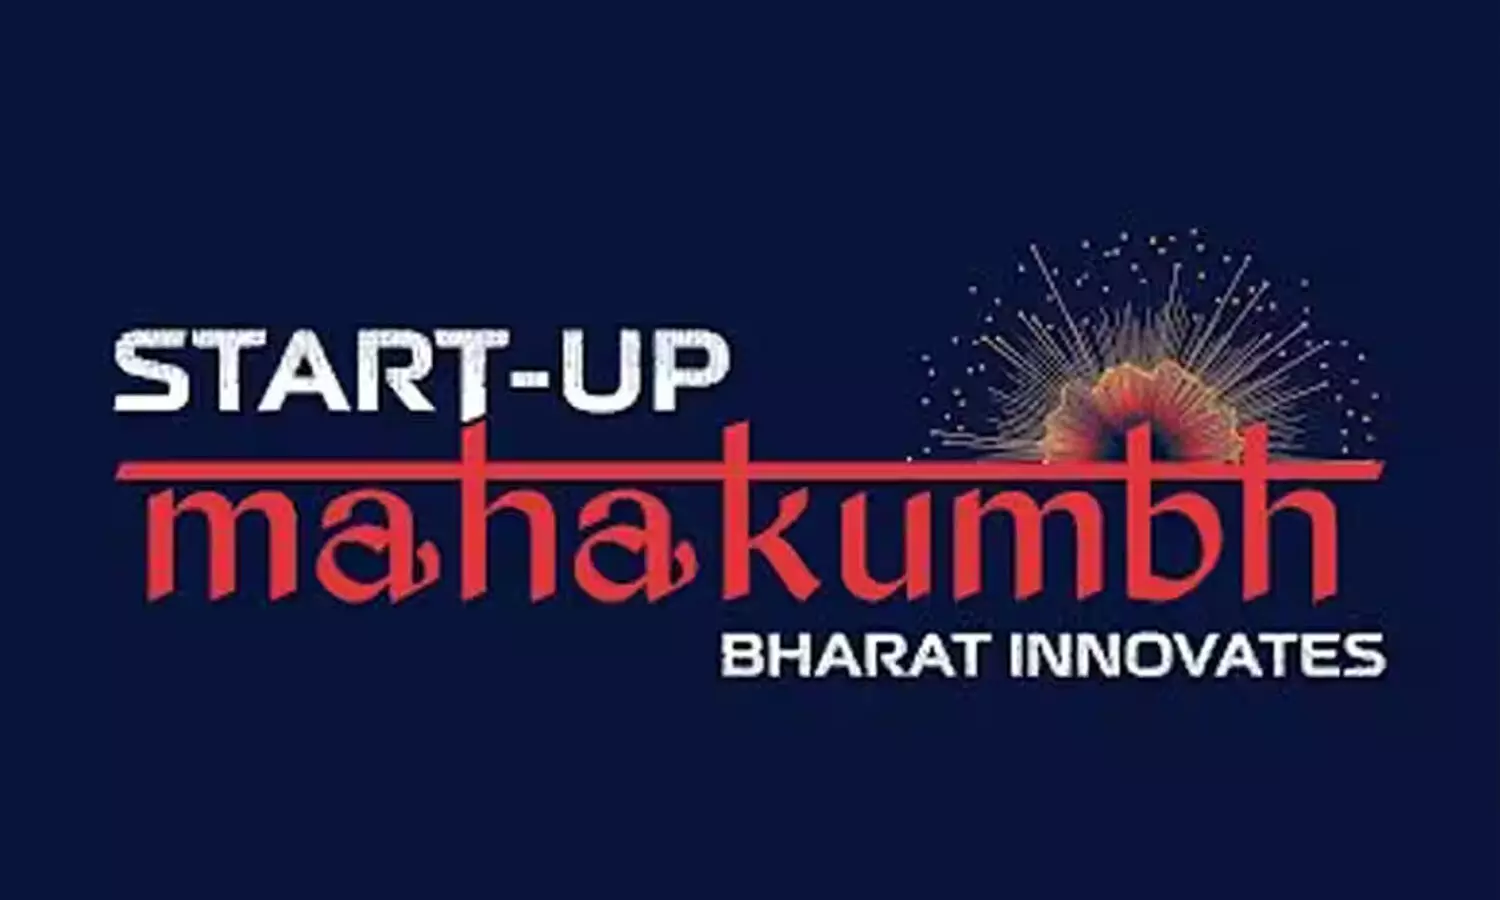 PM Modi ‘Startup Mahakumbh’ - Prime Minister to Address Entrepreneurs Today